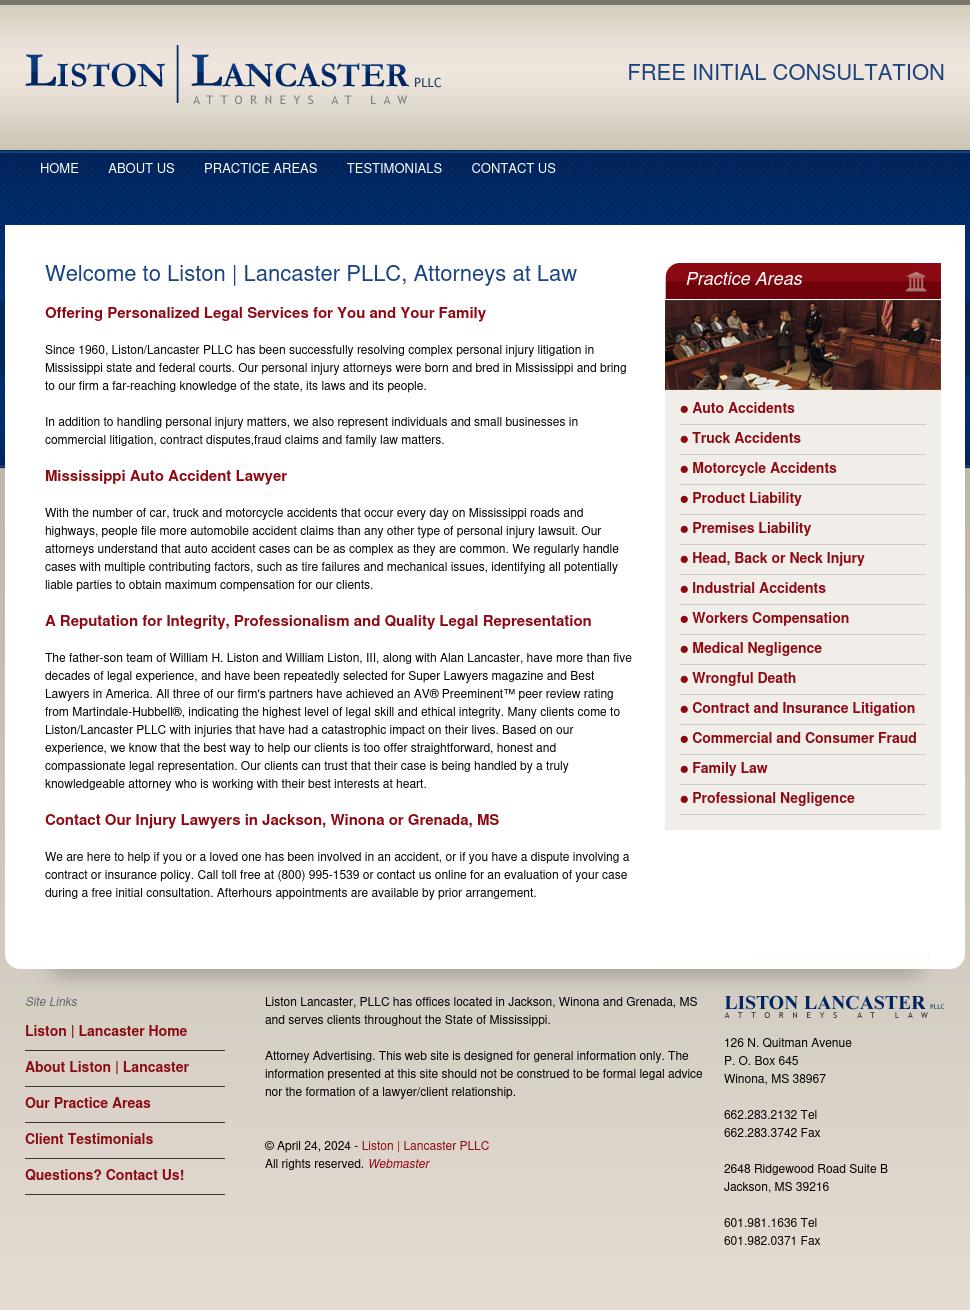 Liston Lancaster PLLC - Jackson MS Lawyers